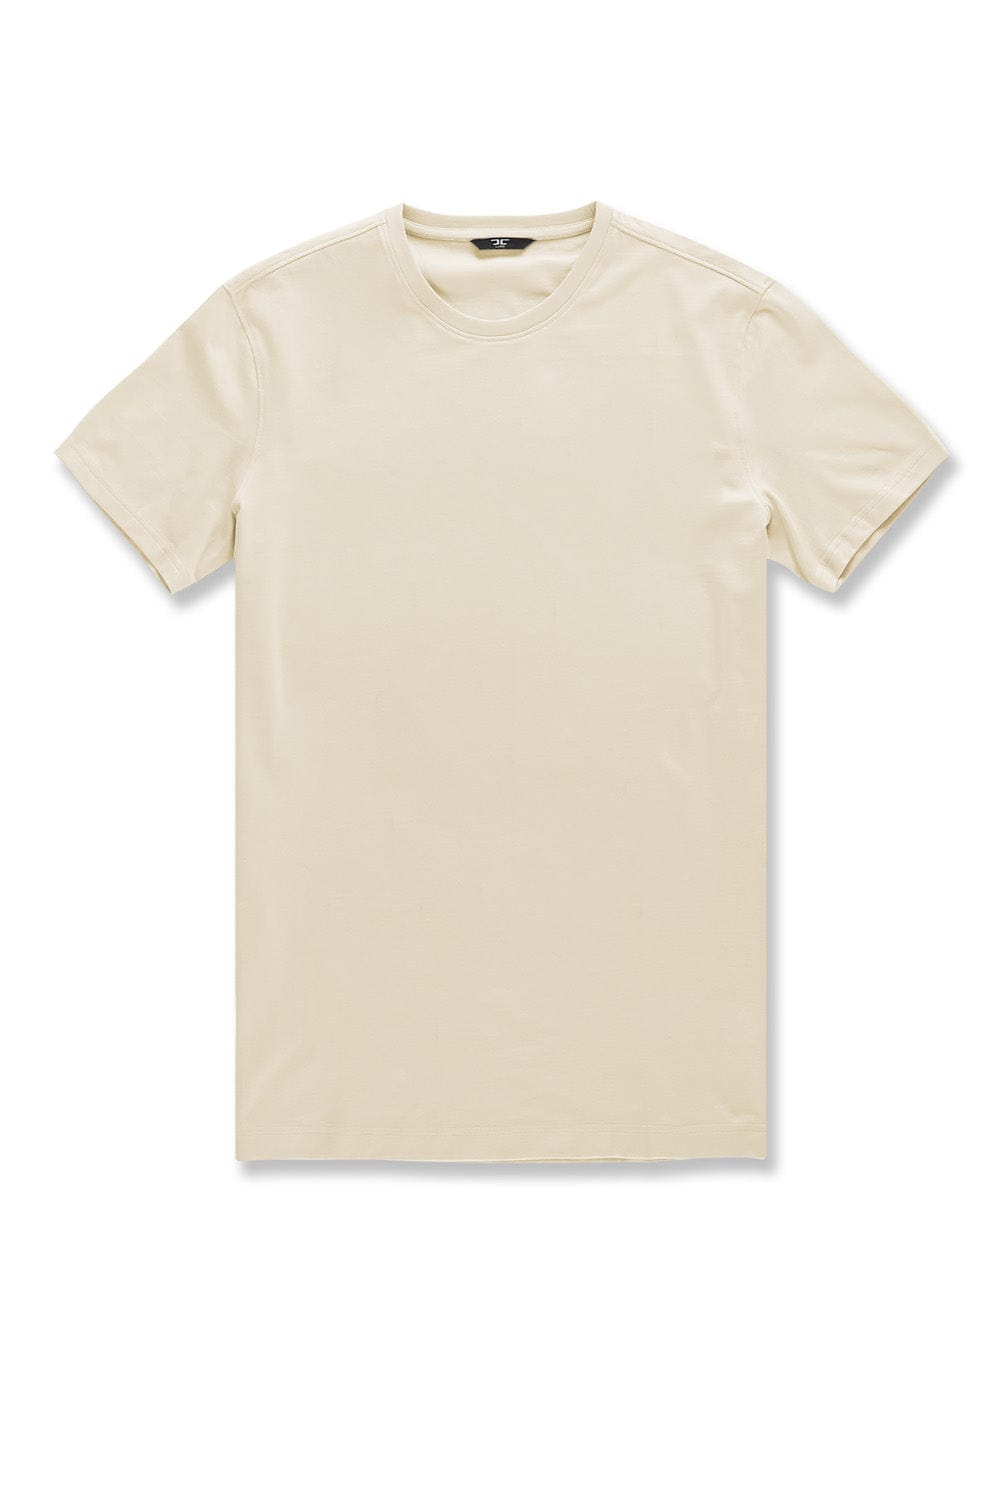 JC Big Men Big Men's Premium Crewneck T-Shirt (Cream) 4XL / Cream / CAB11